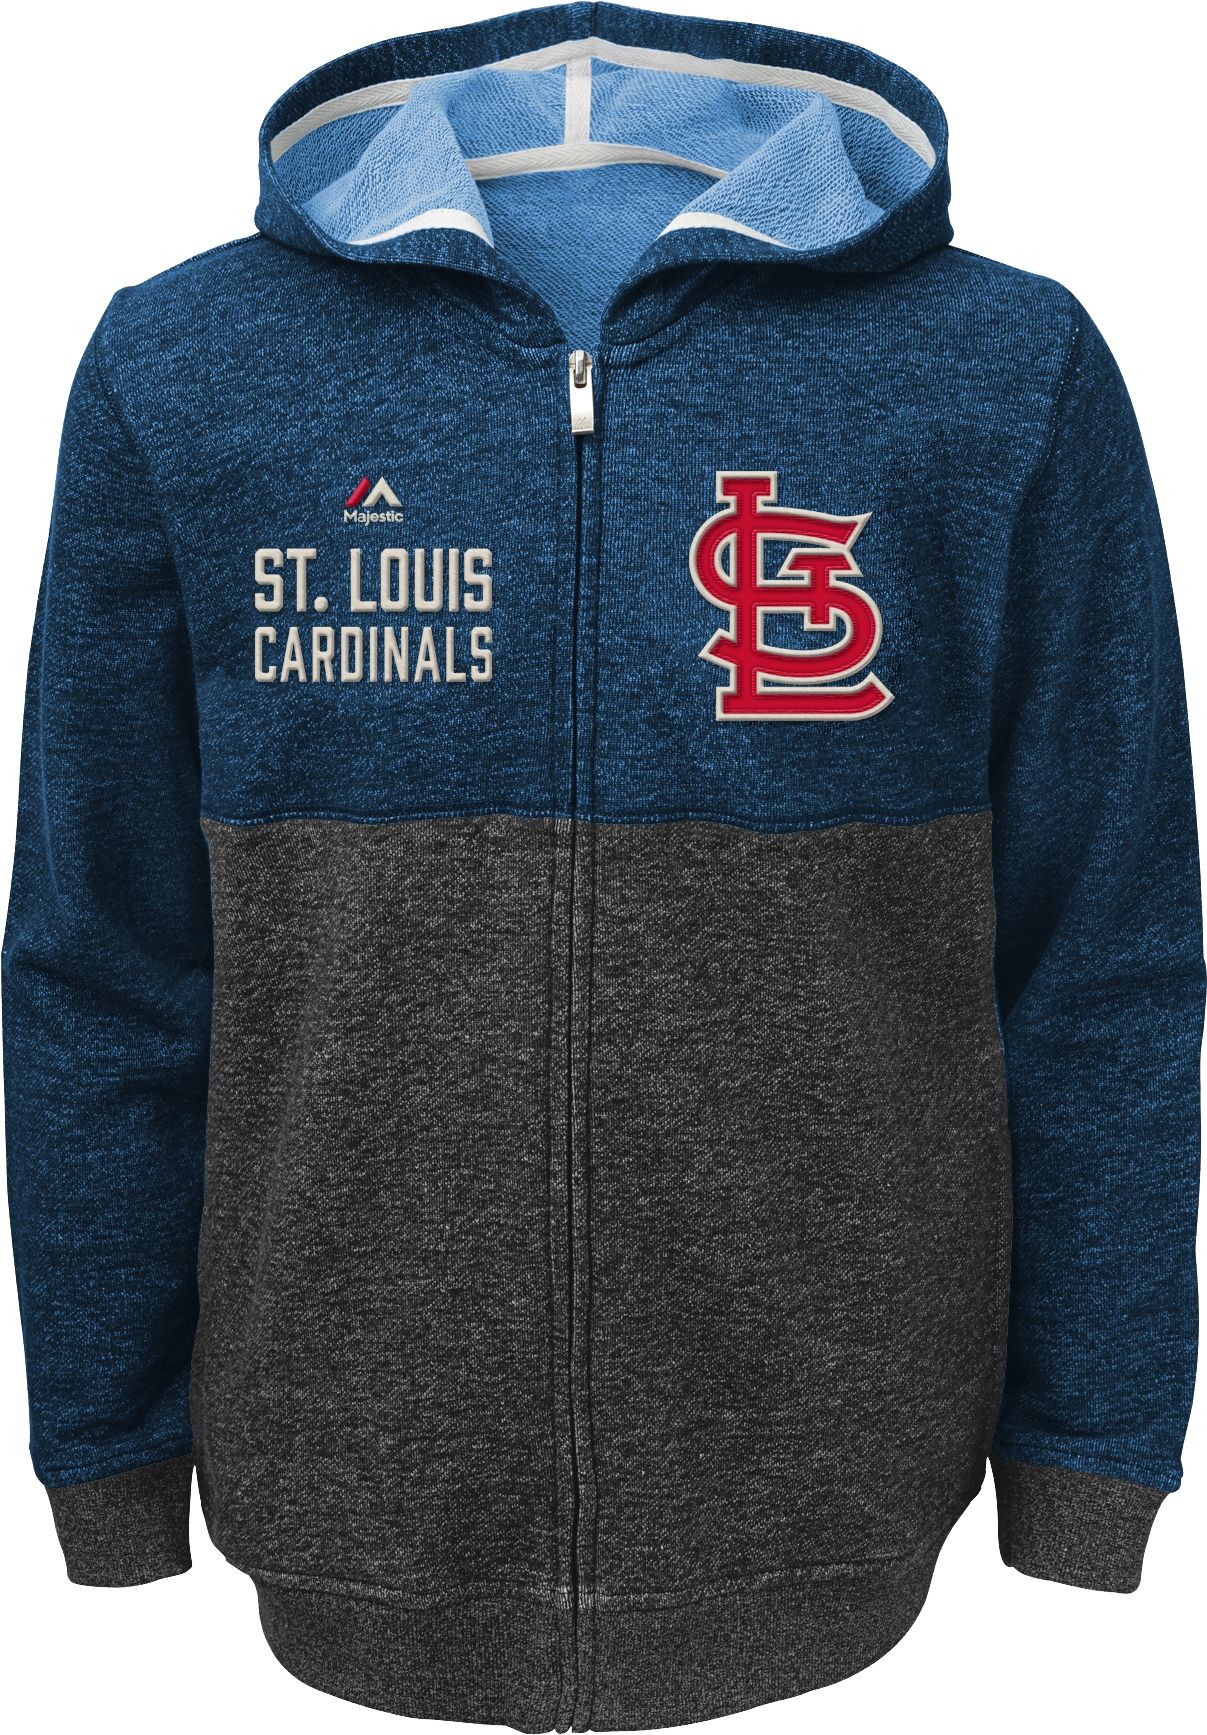 St. Louis Cardinals Apparel & Gear | DICK'S Sporting Goods